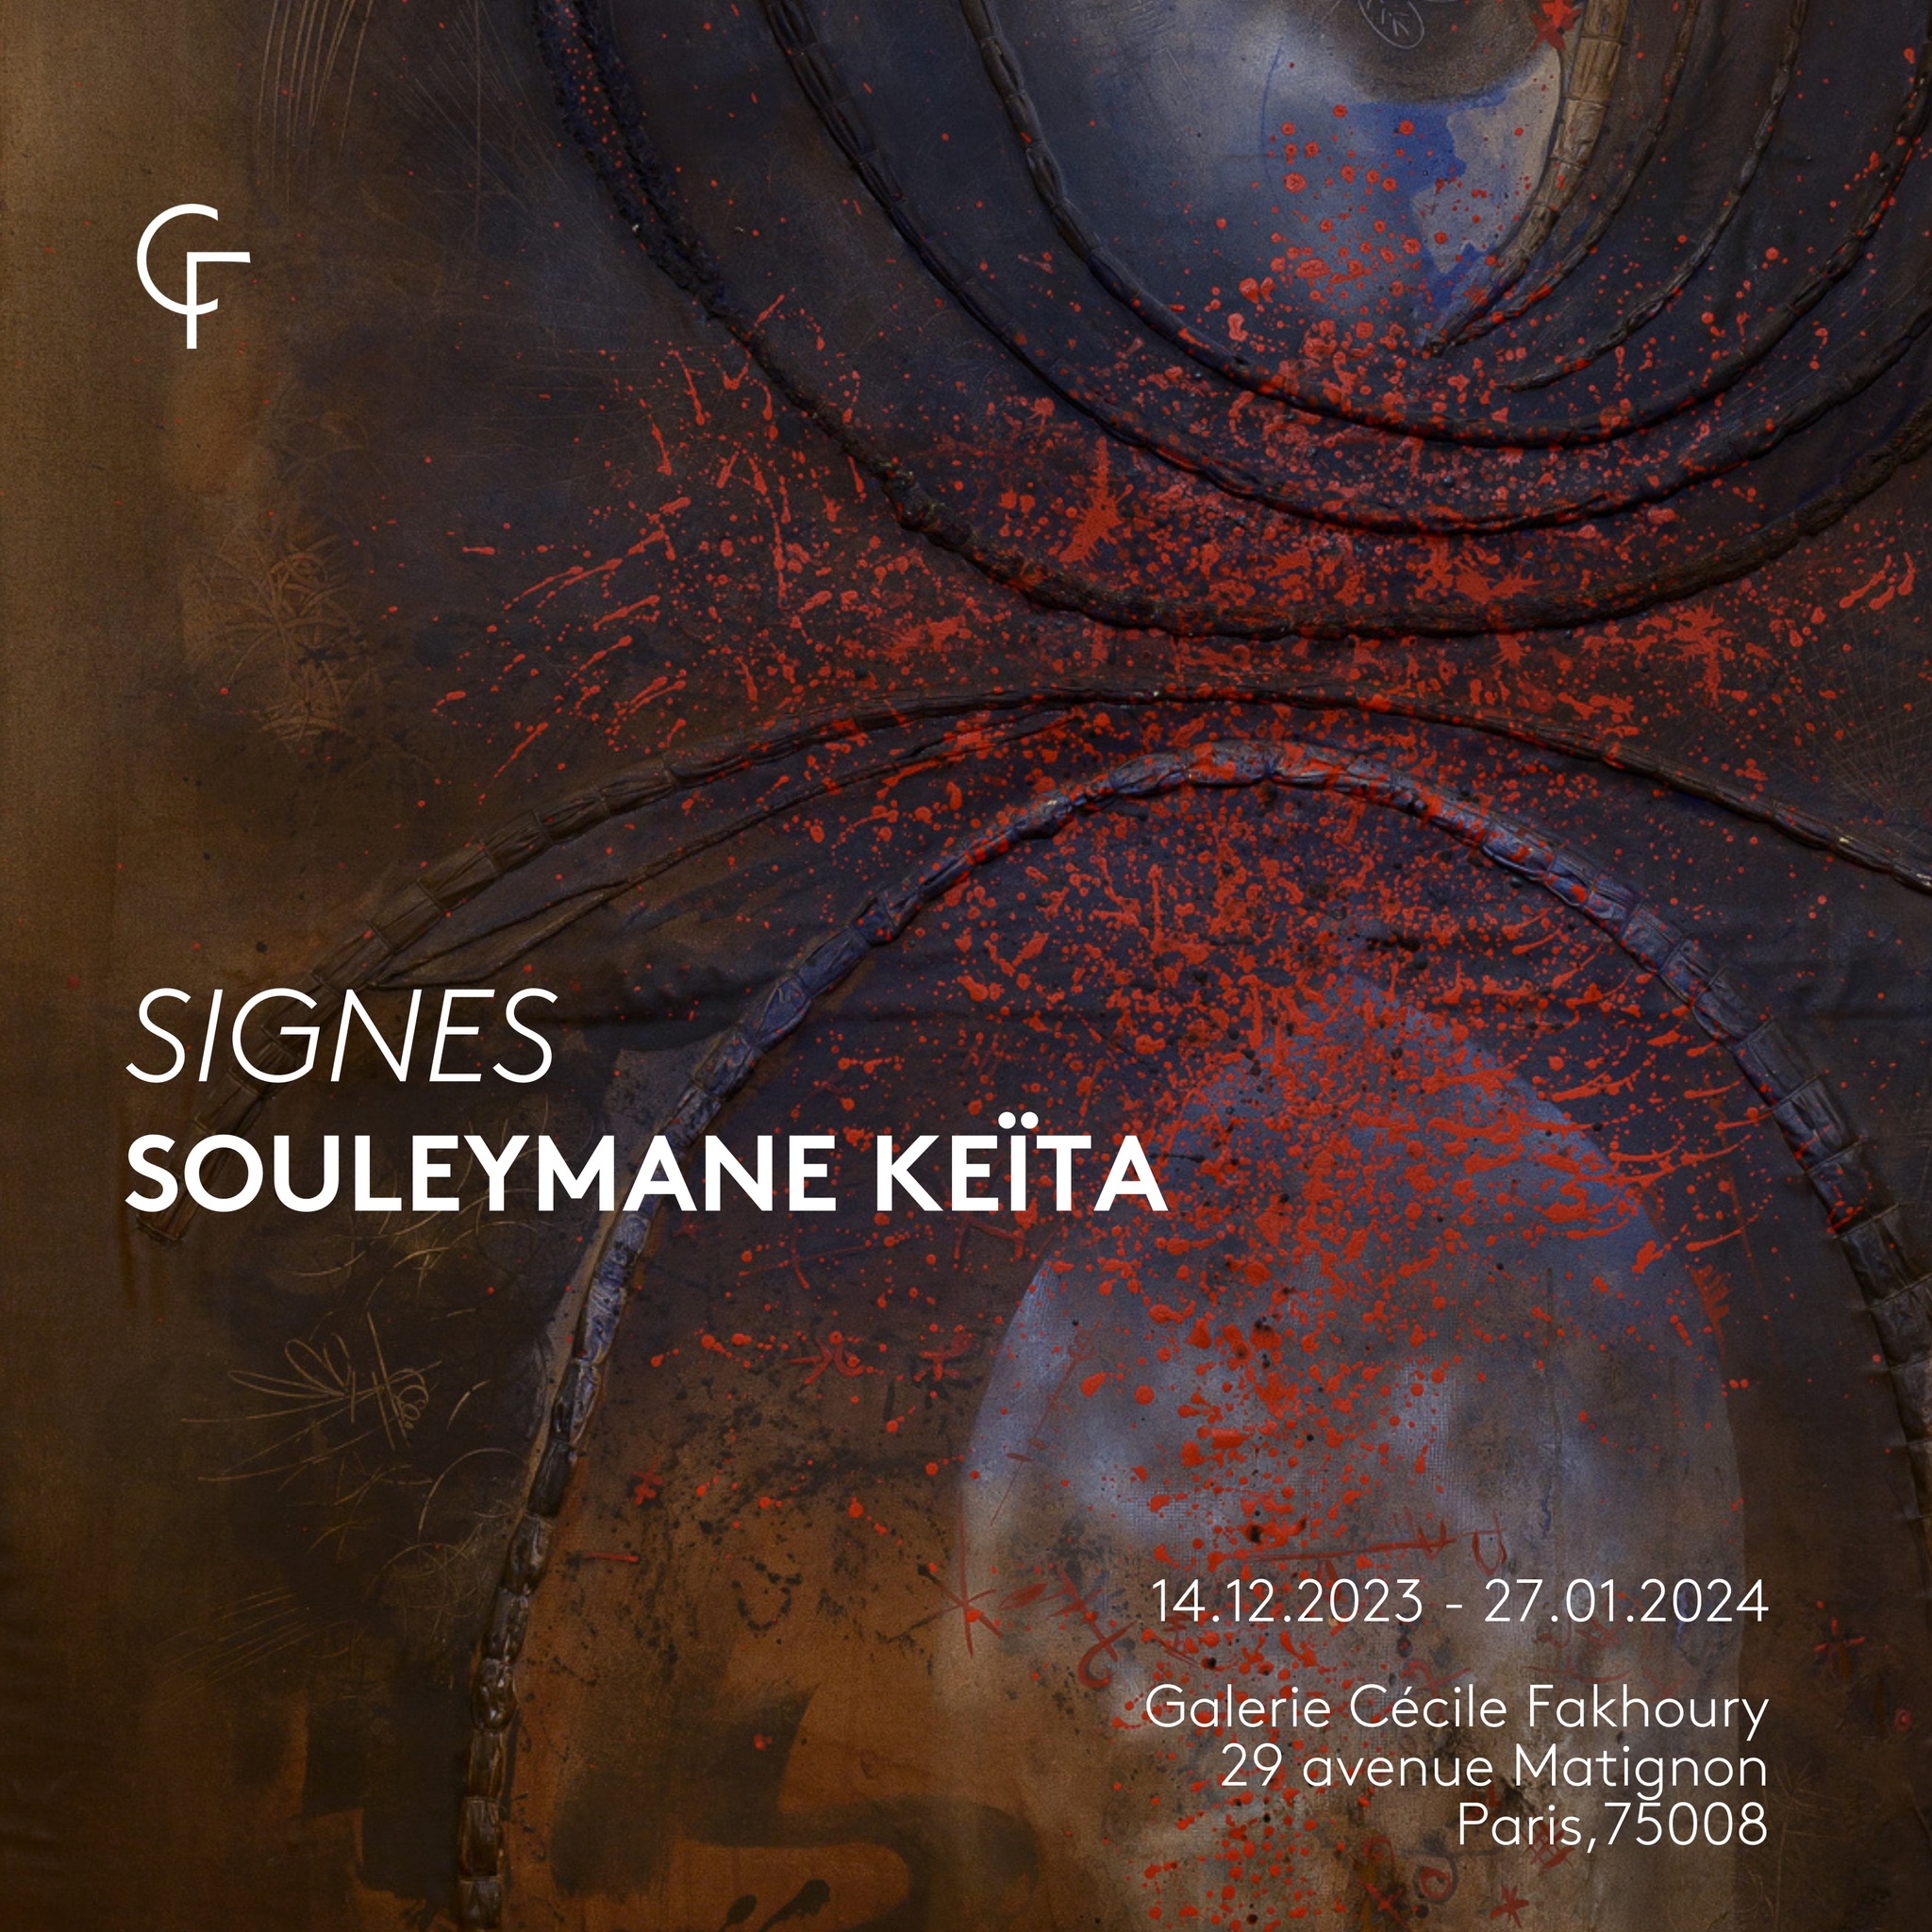 Signe Exhibition Poster